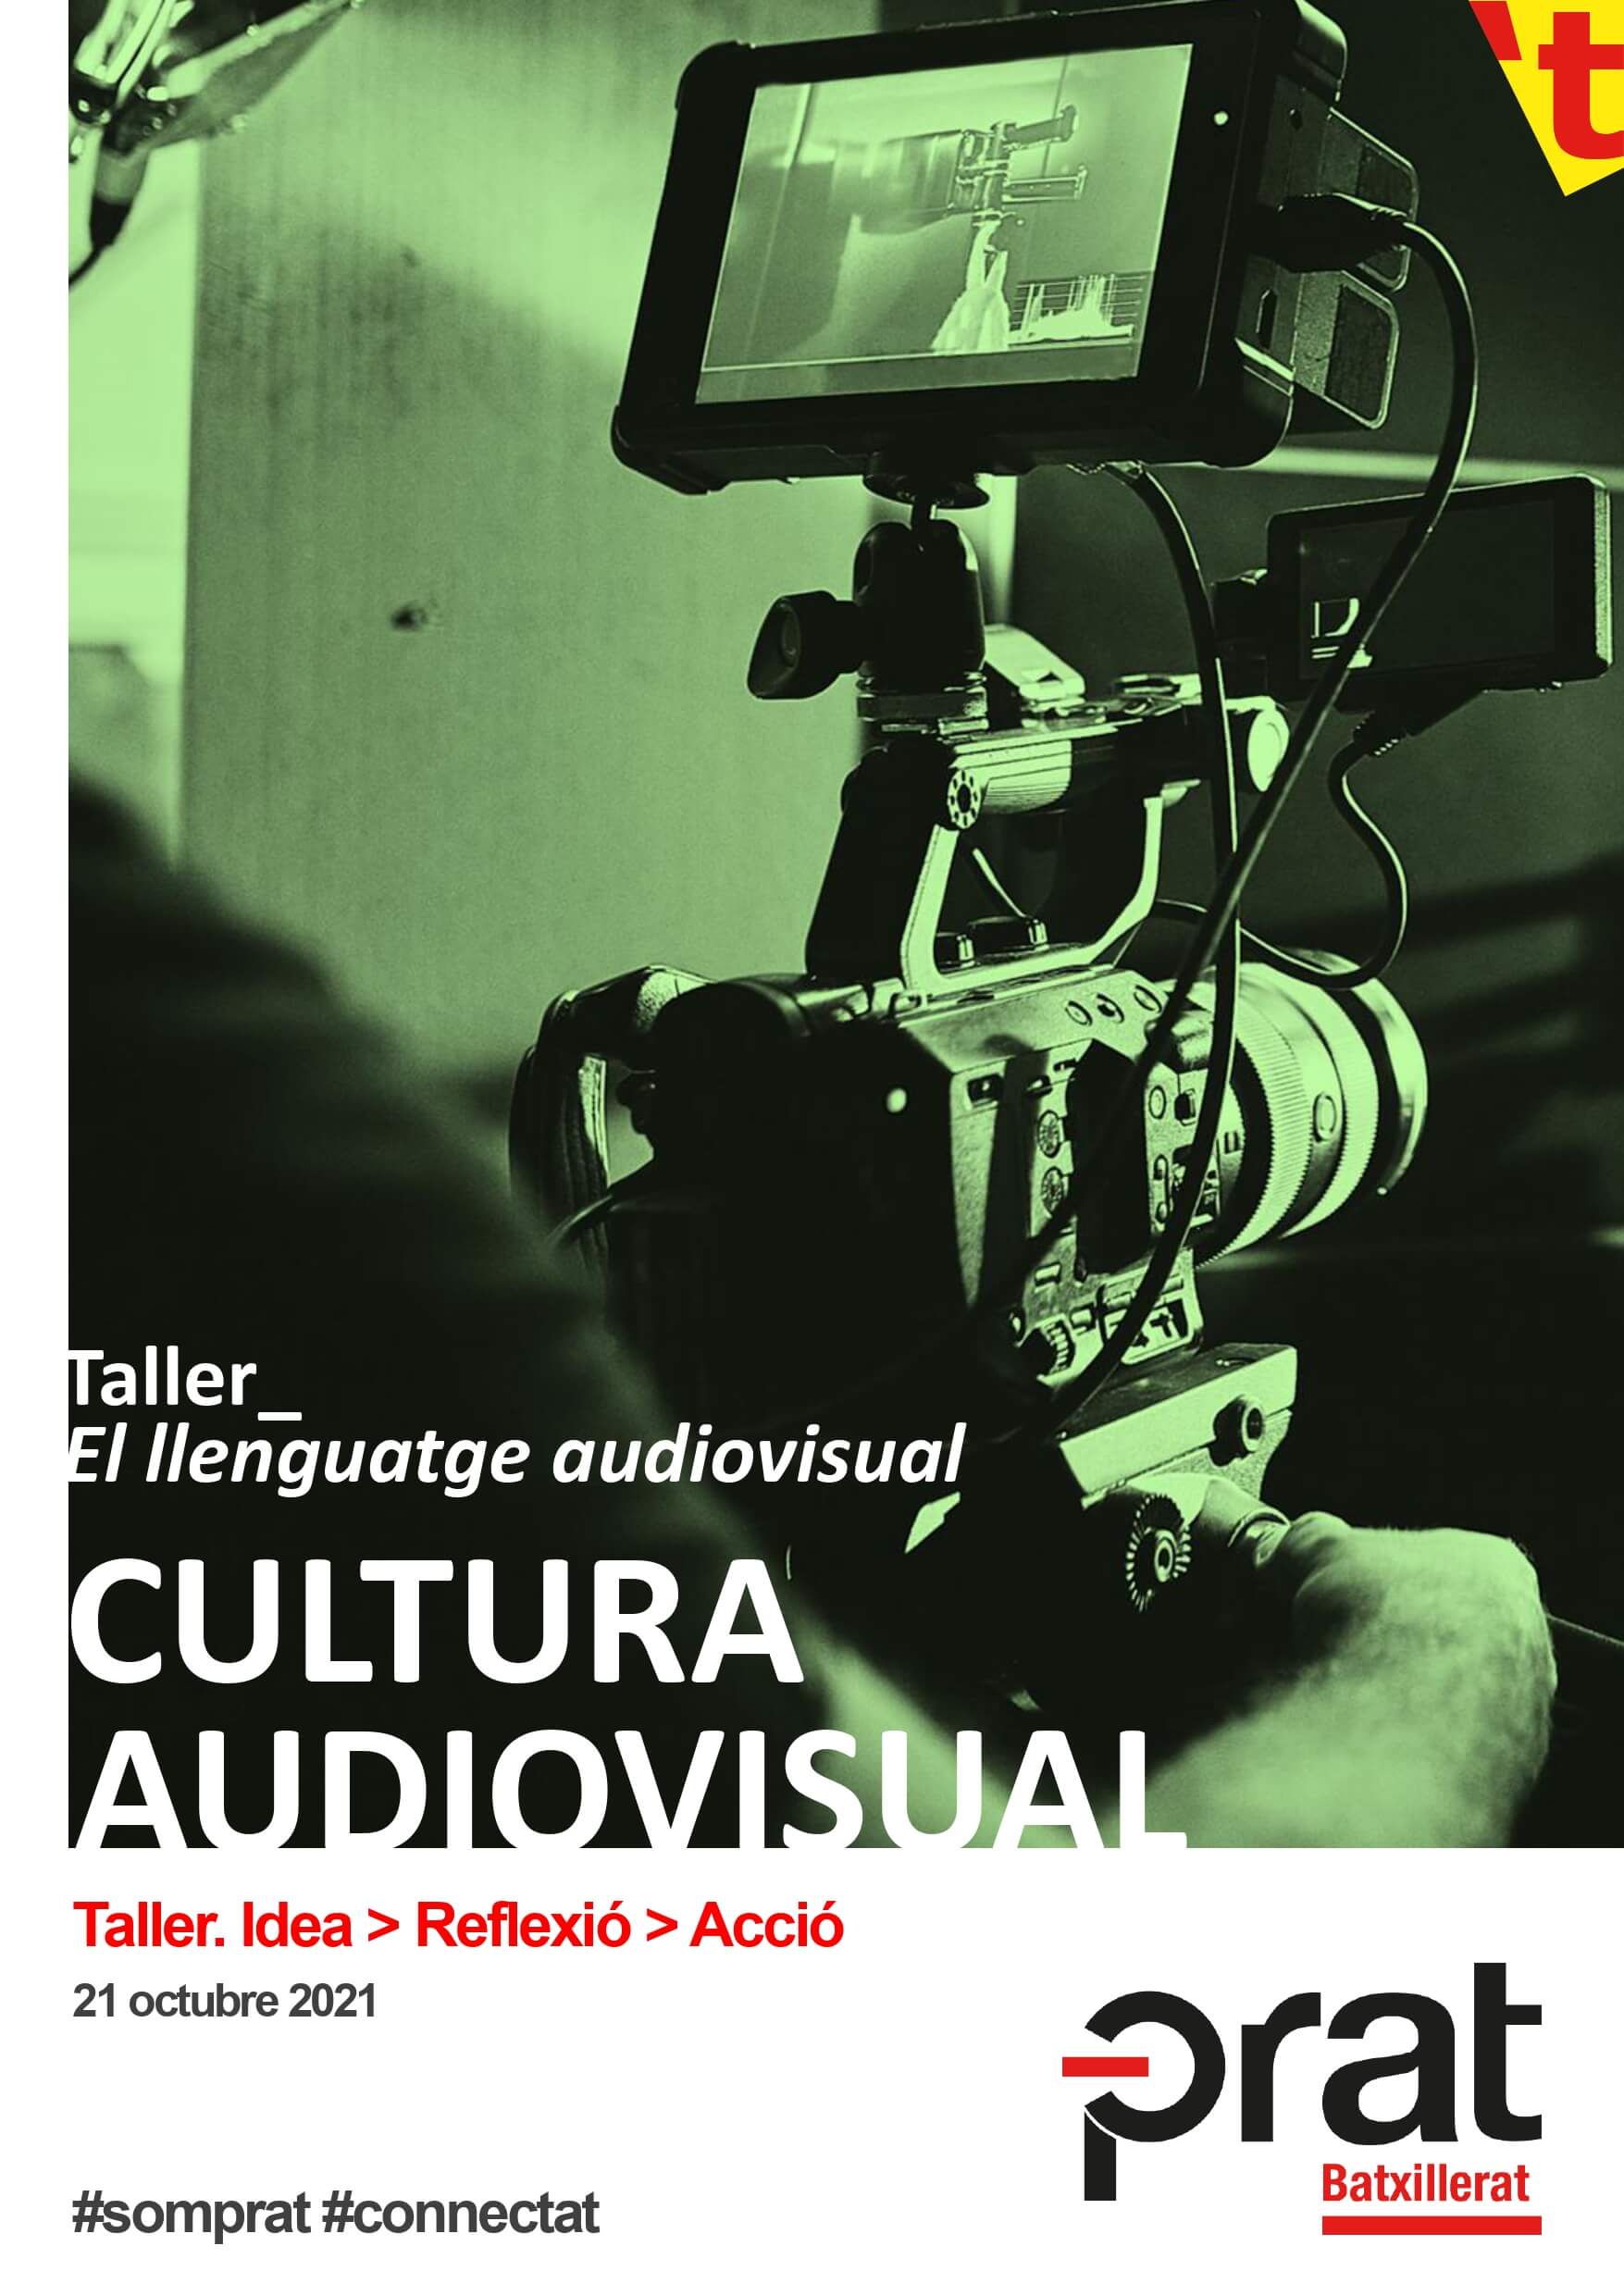 BATX4_Cultura_Audiovisual_21-22